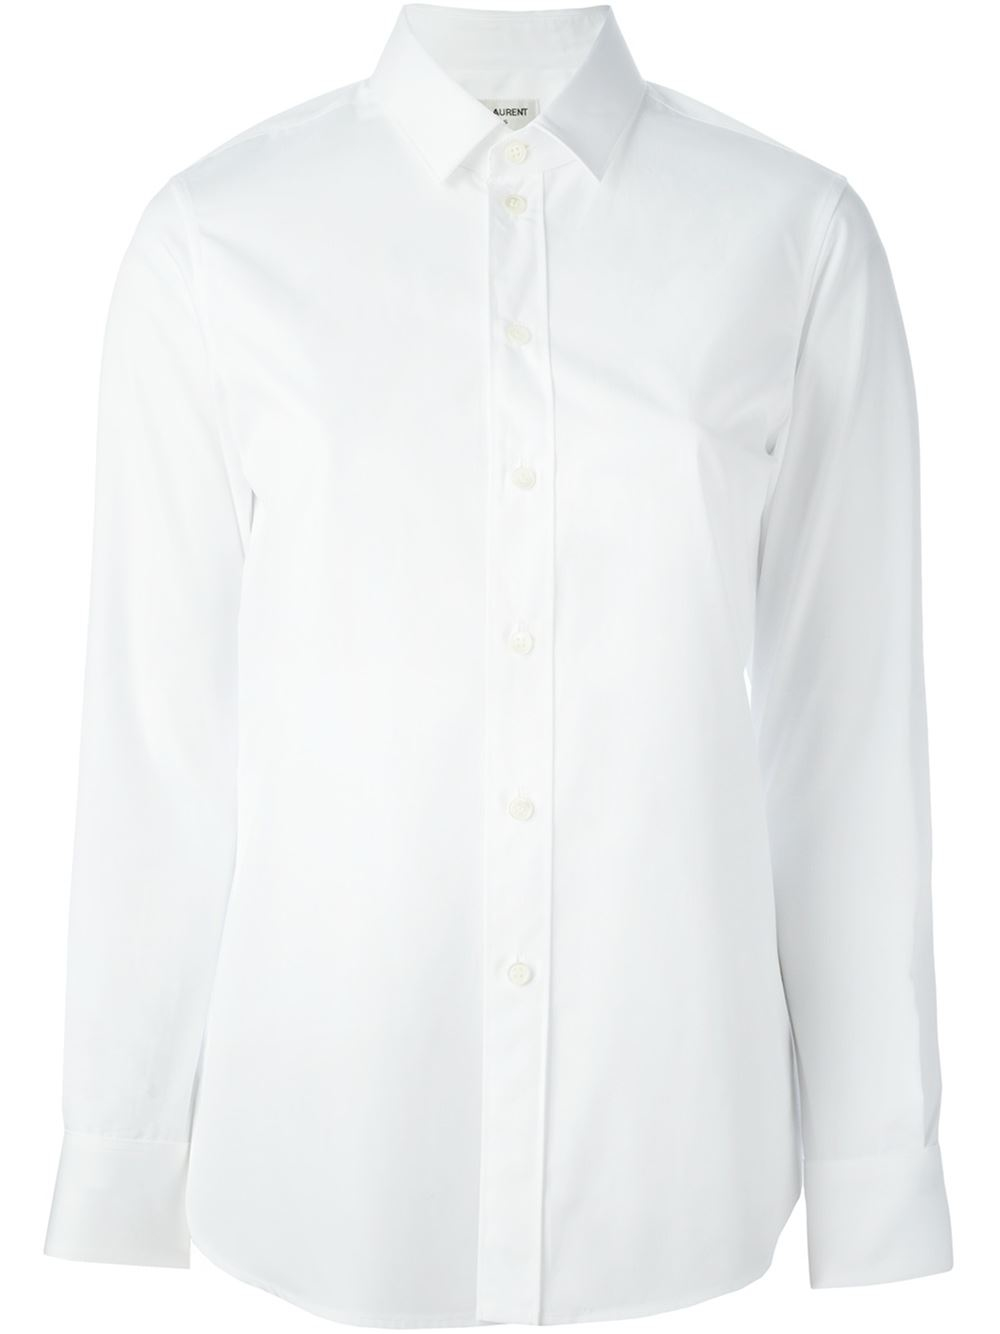 Saint laurent Classic Collar Shirt in White | Lyst